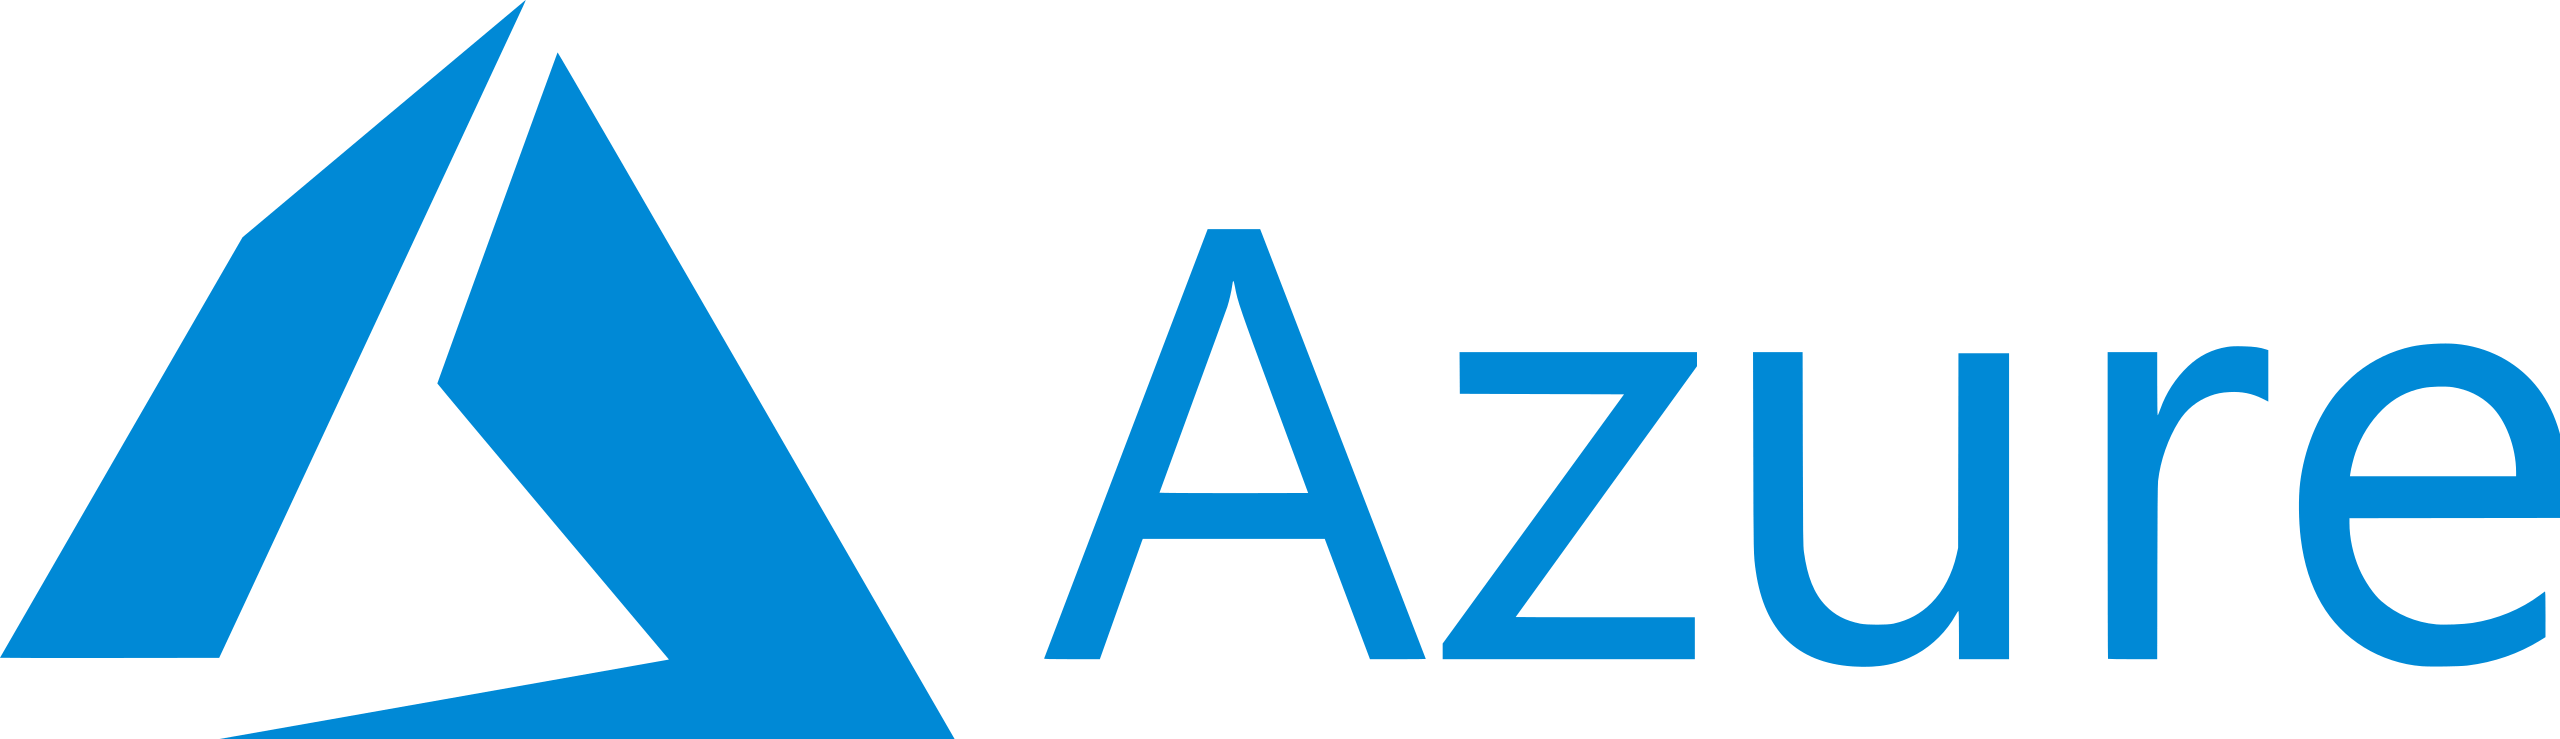 Microsoft azure logo.svg (1)